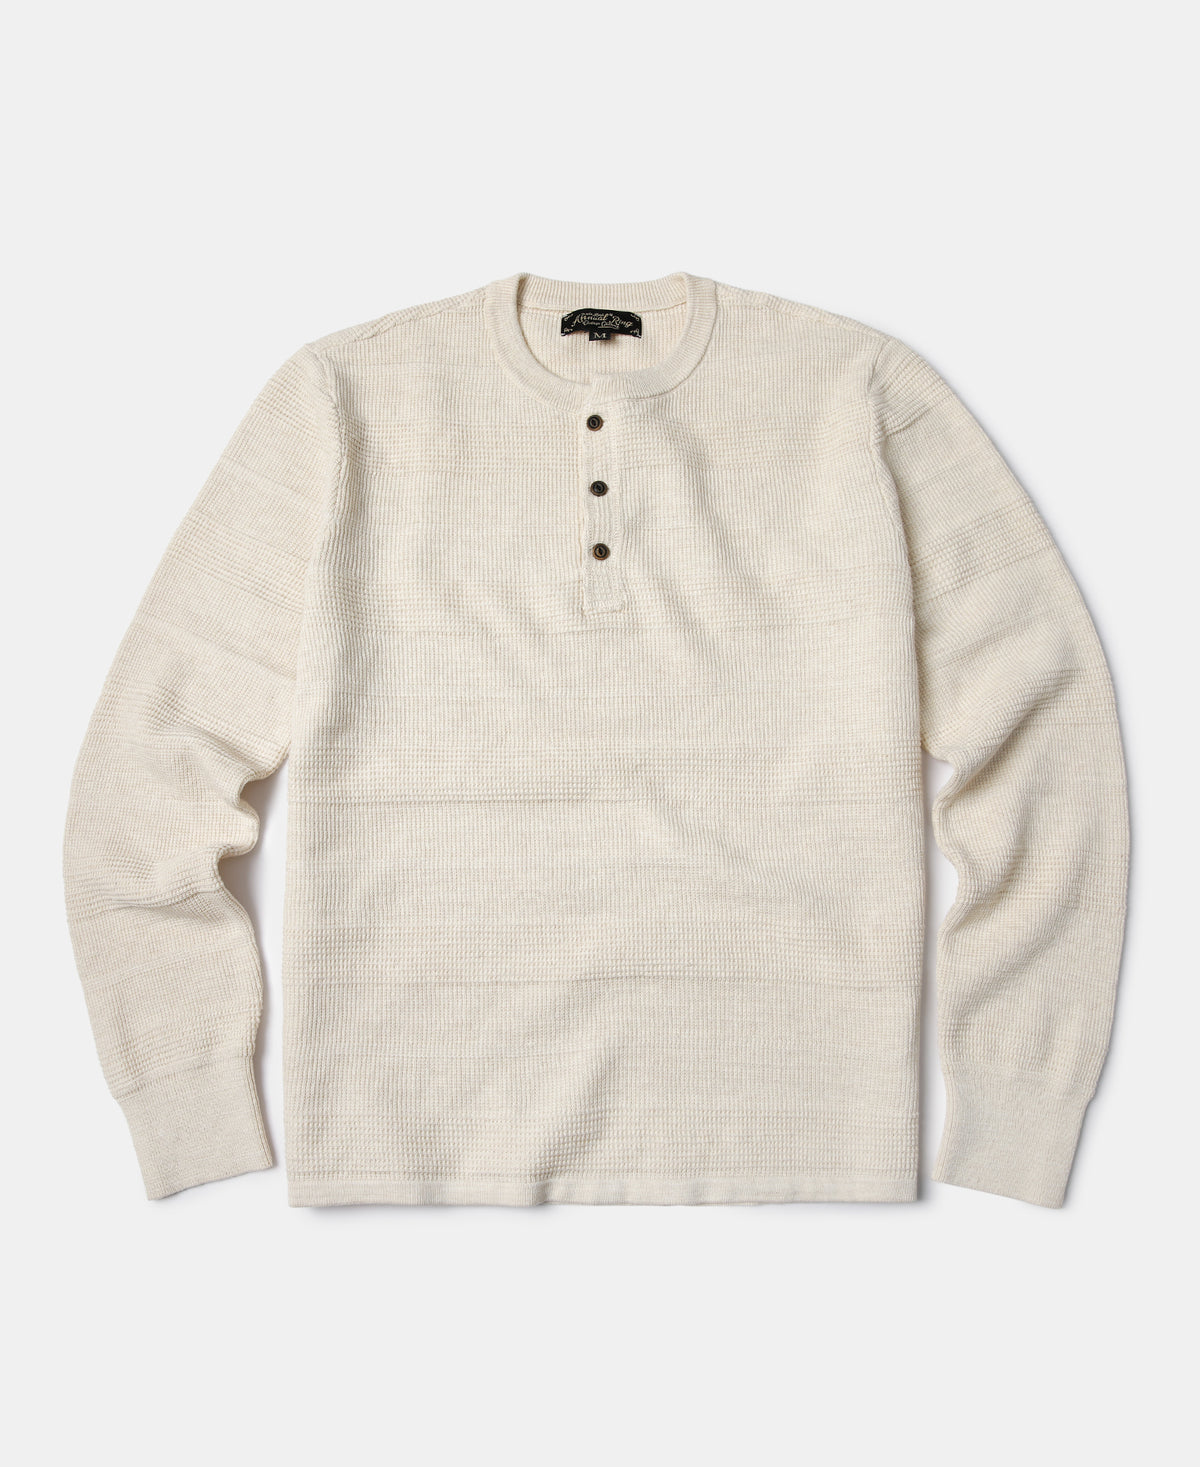 Jacquard Knitted Henley Shirt